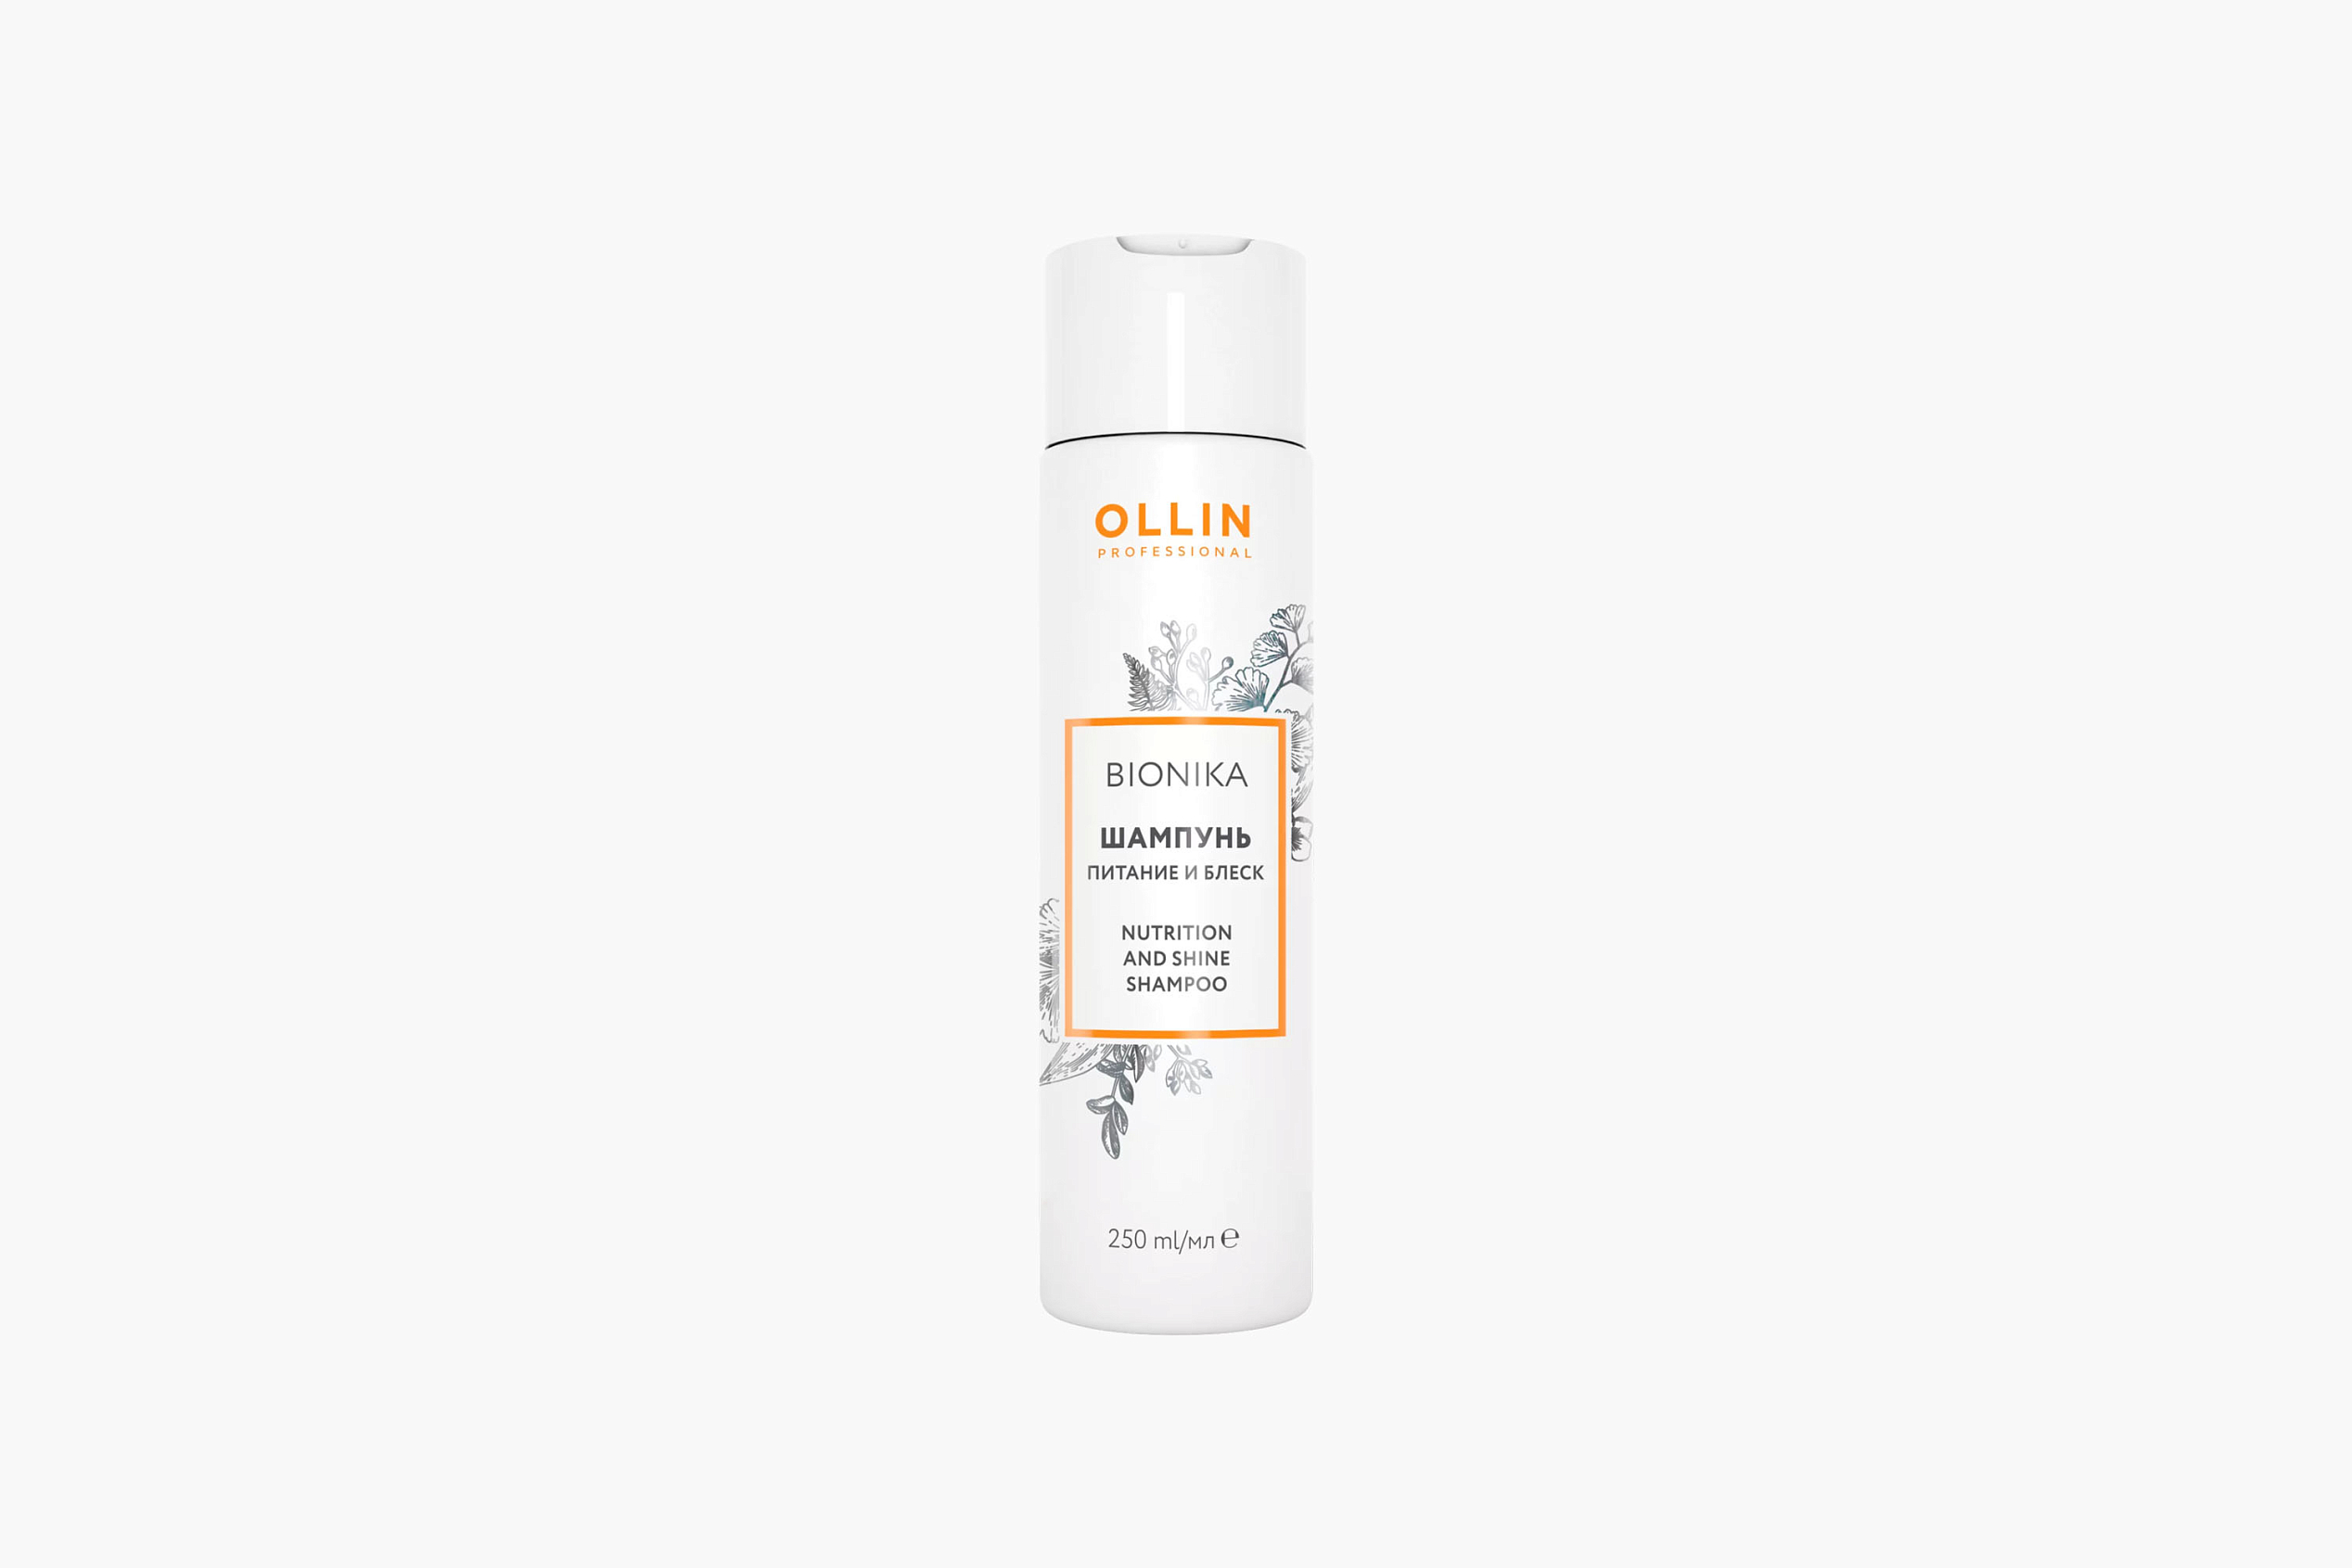 Ollin Professional Bionika Nutrition And Shine Shampoo фото 1